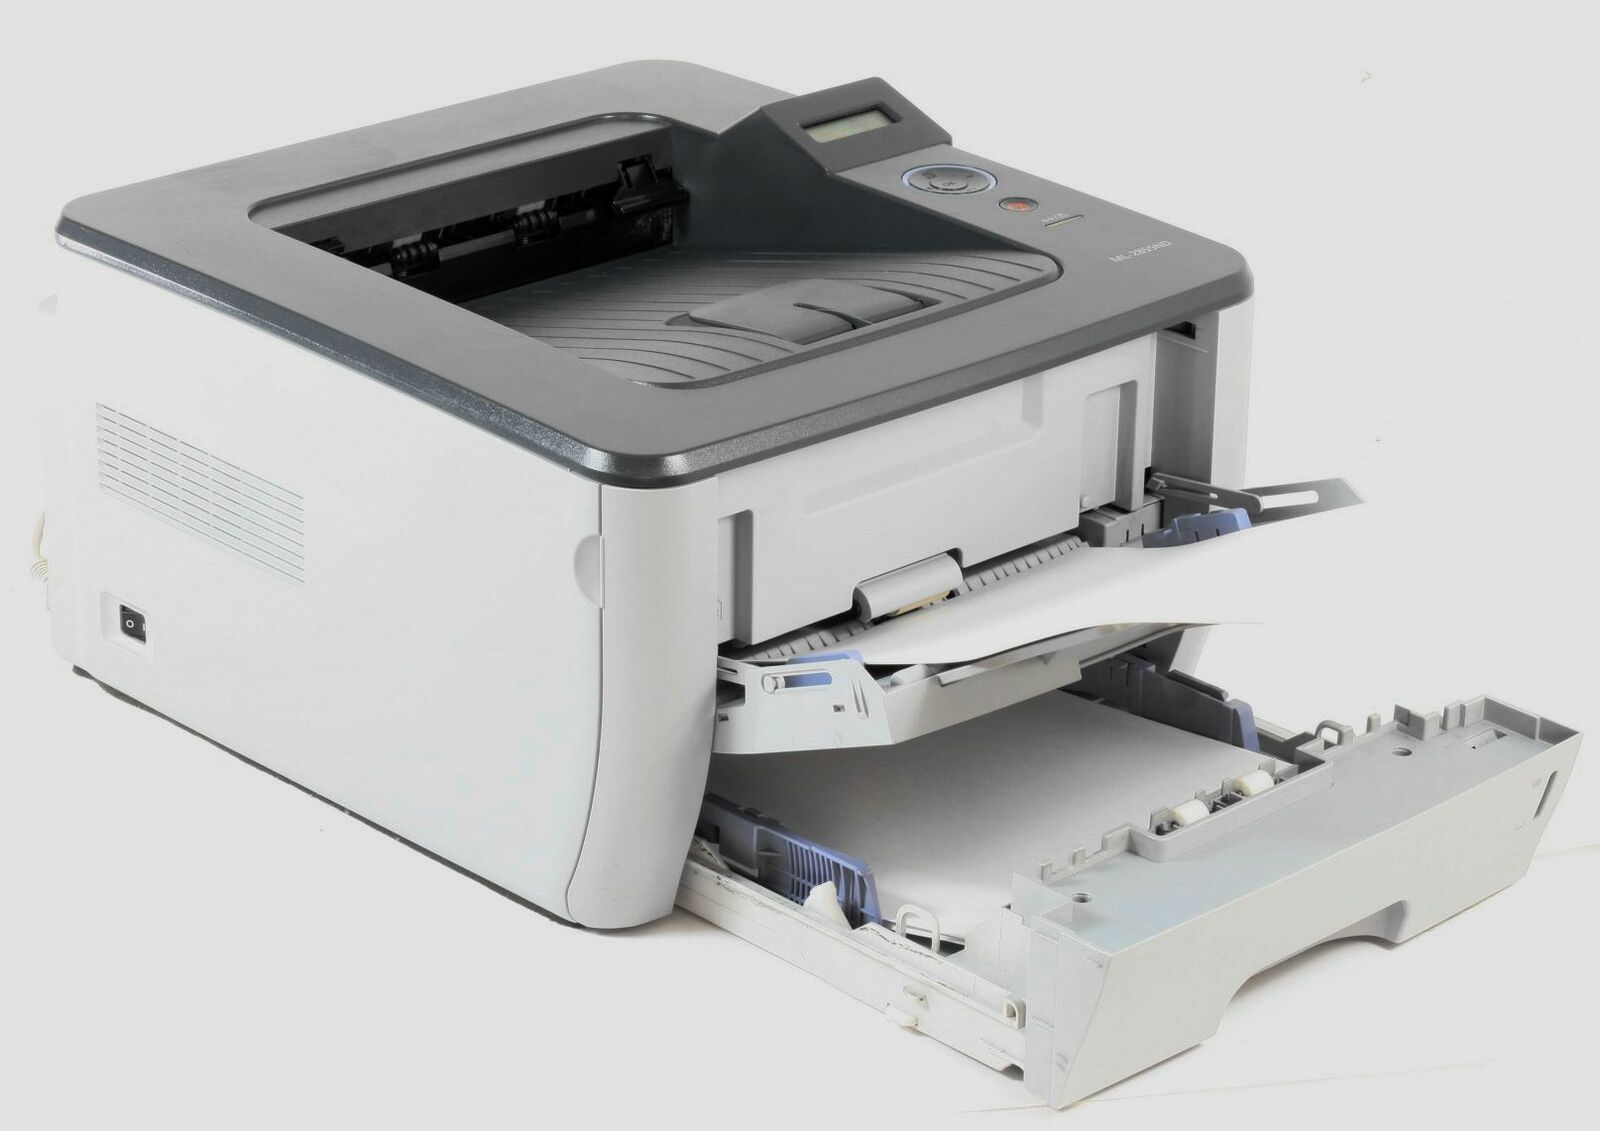 Samsung ML-2855ND Monochrome laser printer B/W A4 1200x1200 DPI 28ppm Network Duplex Automatic duplex